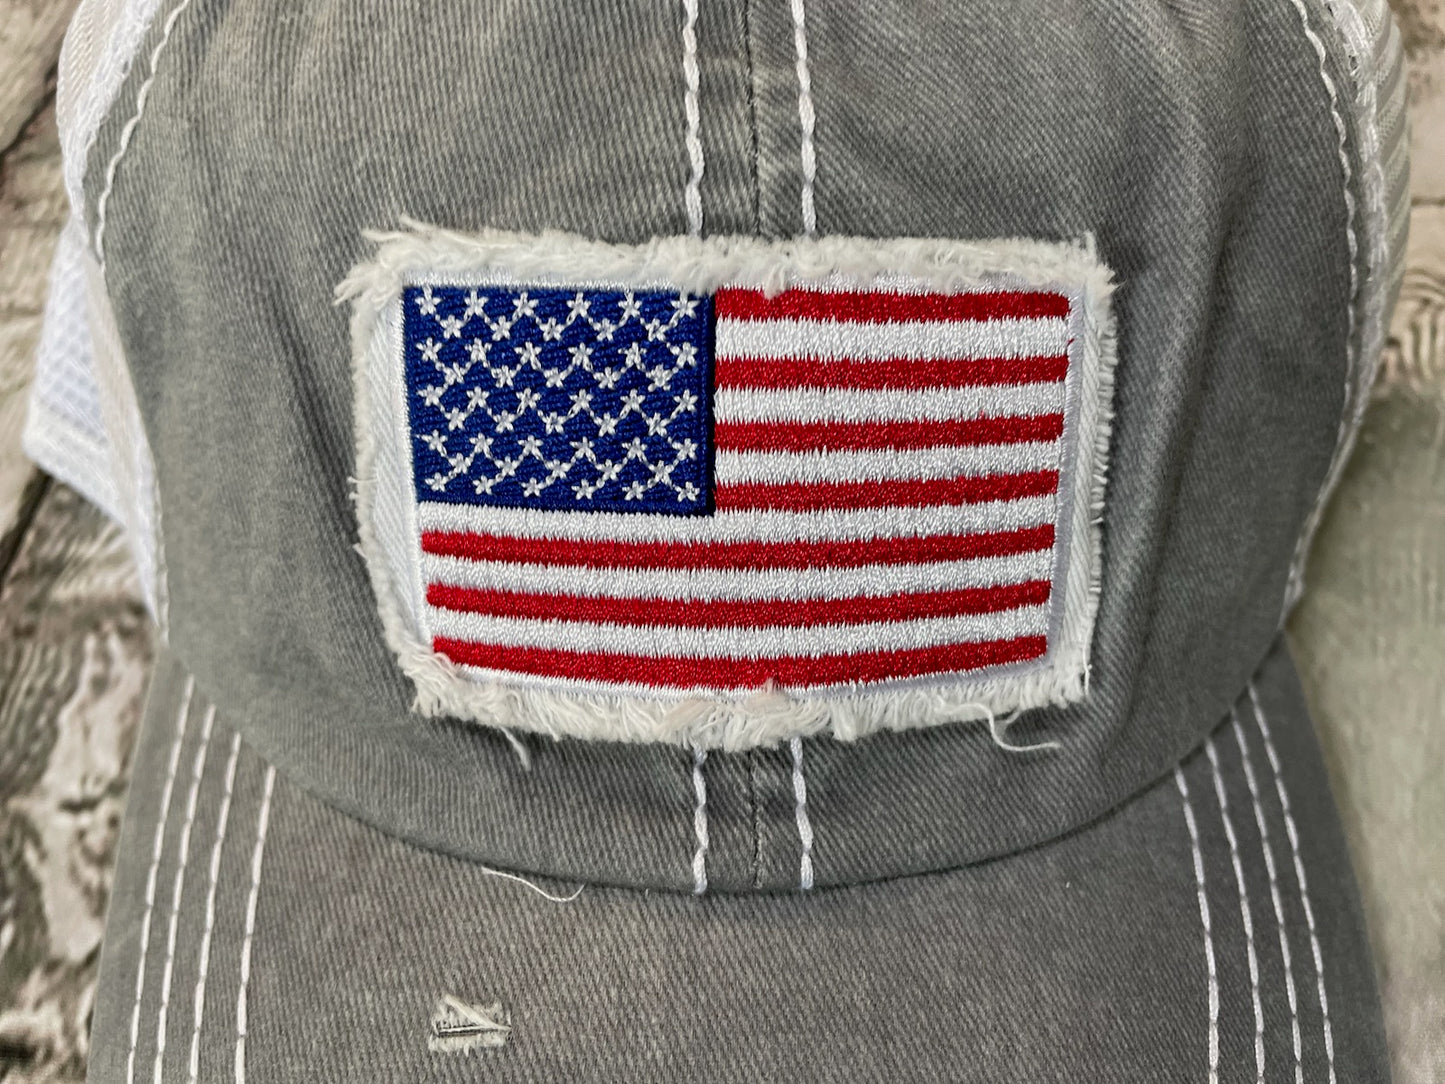 Mesh Baseball Hat w/ American Flag Patch